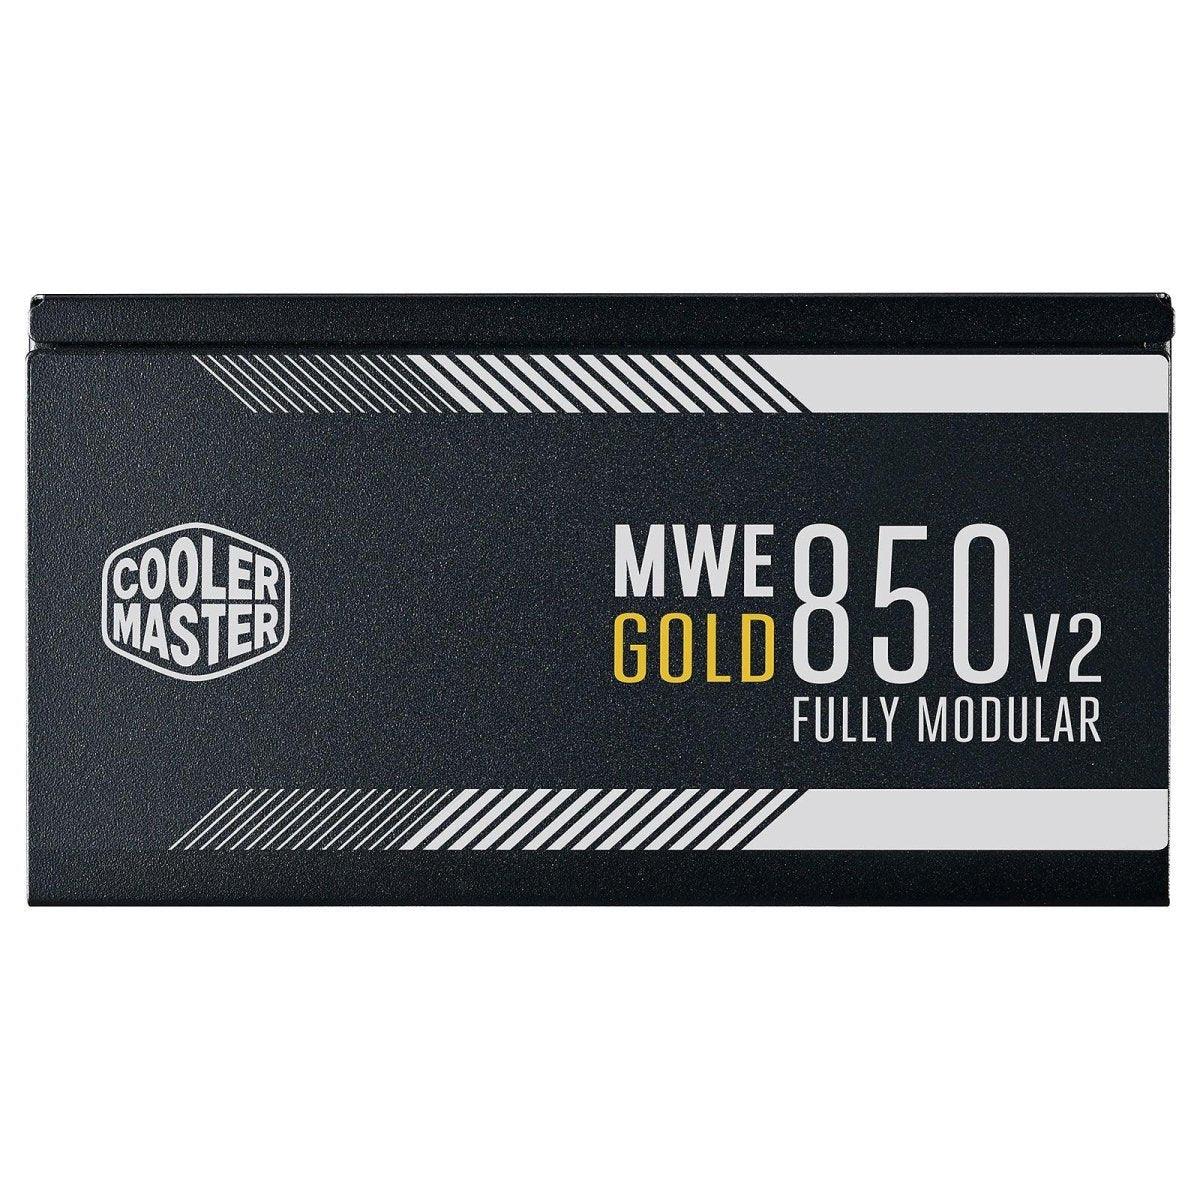 Cooler Master MWE Gold 850 V2 (Full Modular) maroc Prix Alimentation PC pas cher - smartmarket.ma